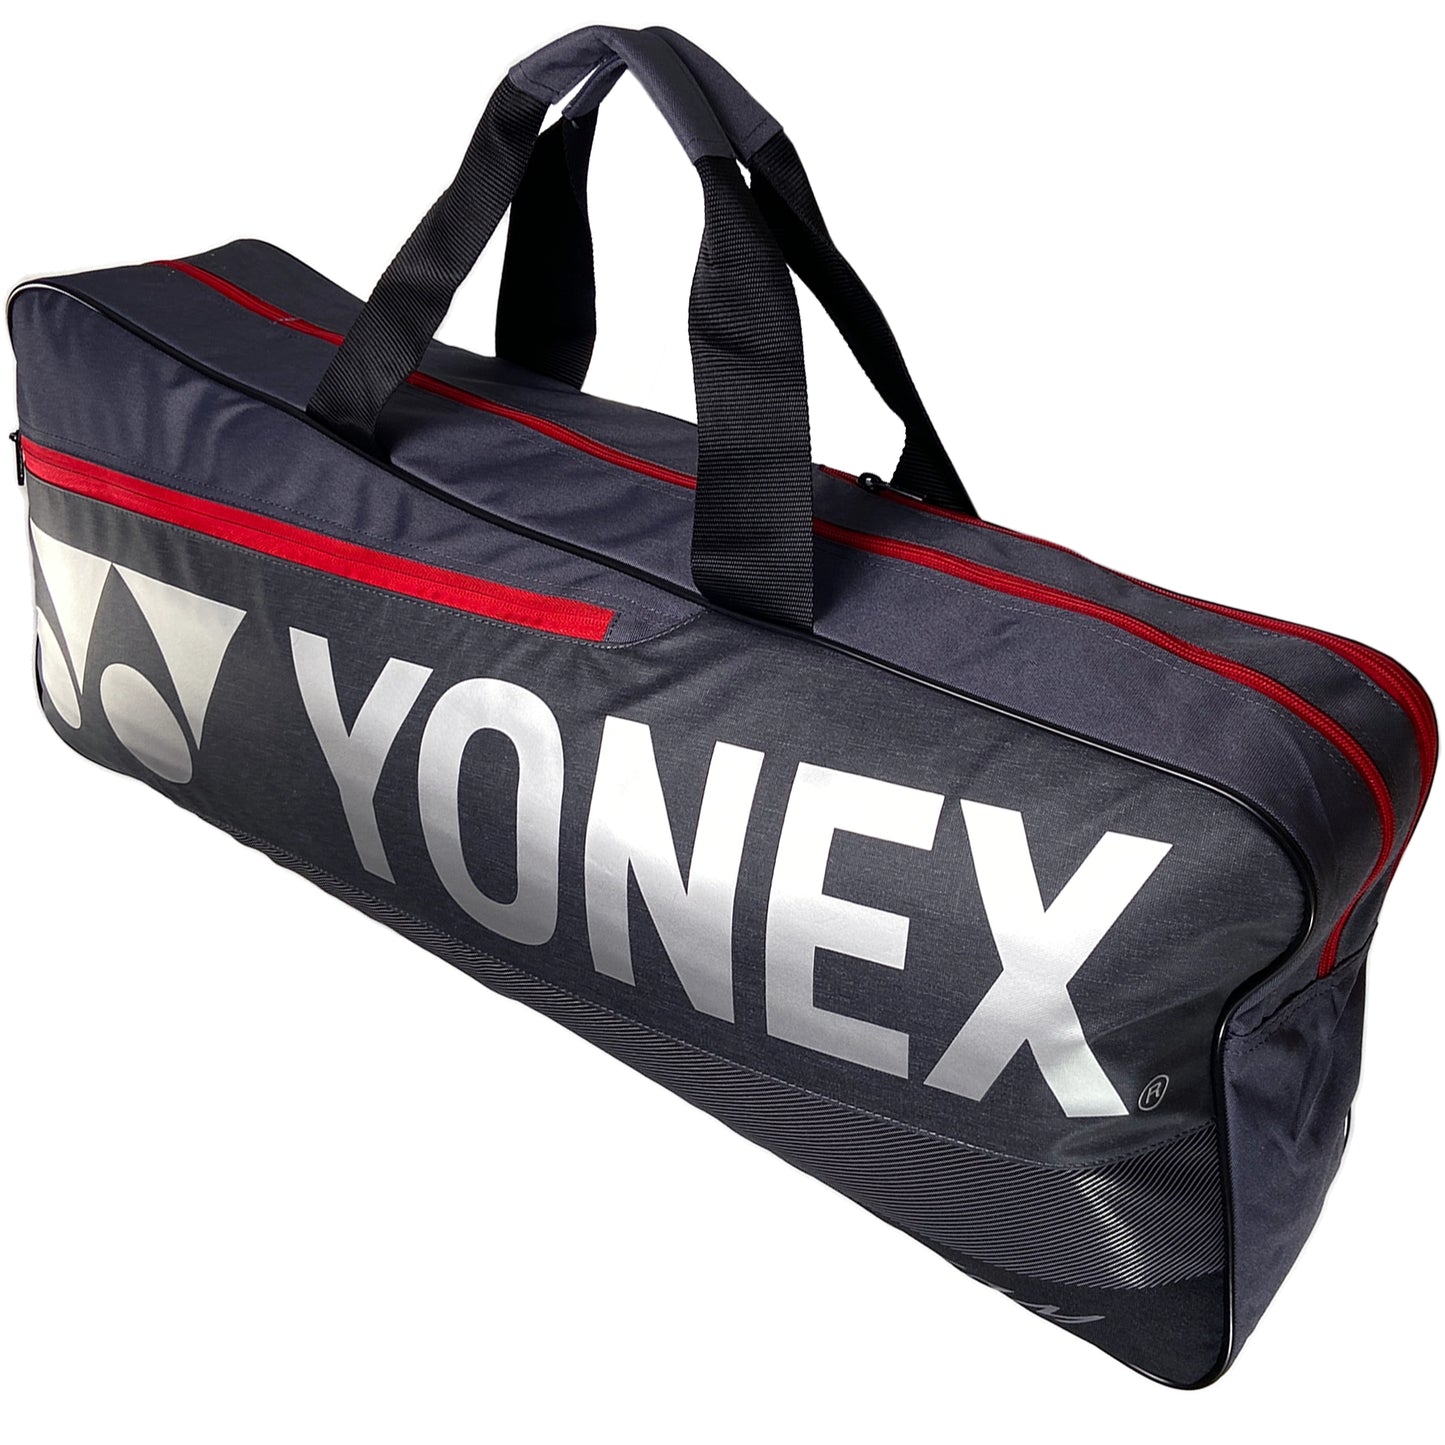 Yonex Team Tournament Bag (BA42131WEX) Greyish Pearl